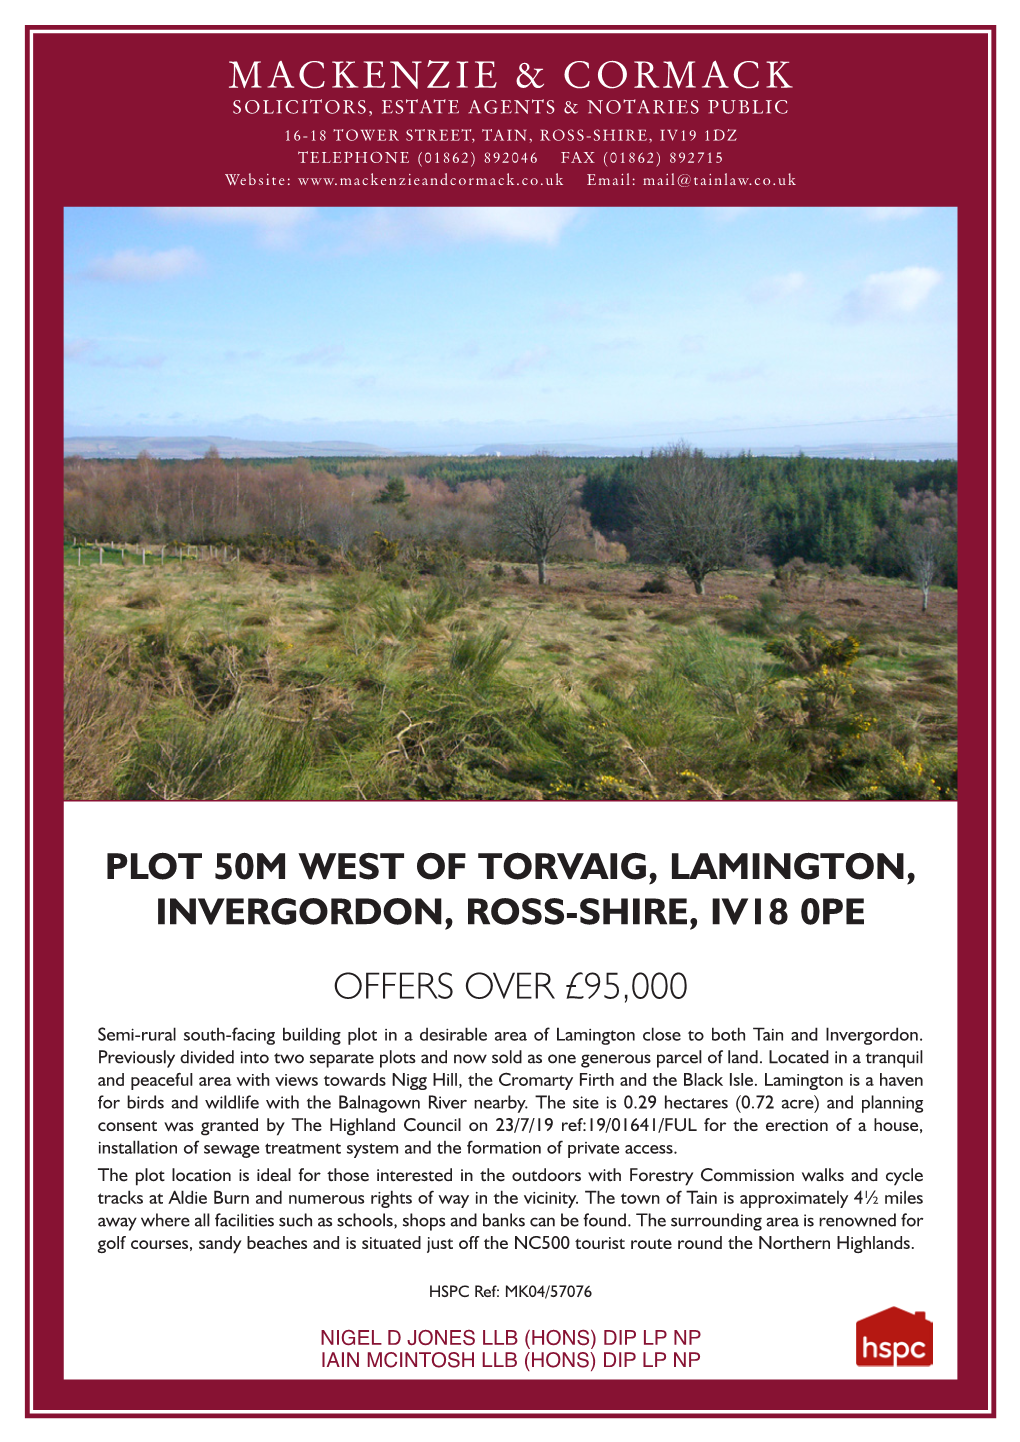 Mackenzie & Cormack Plot 50M West of Torvaig, Lamington